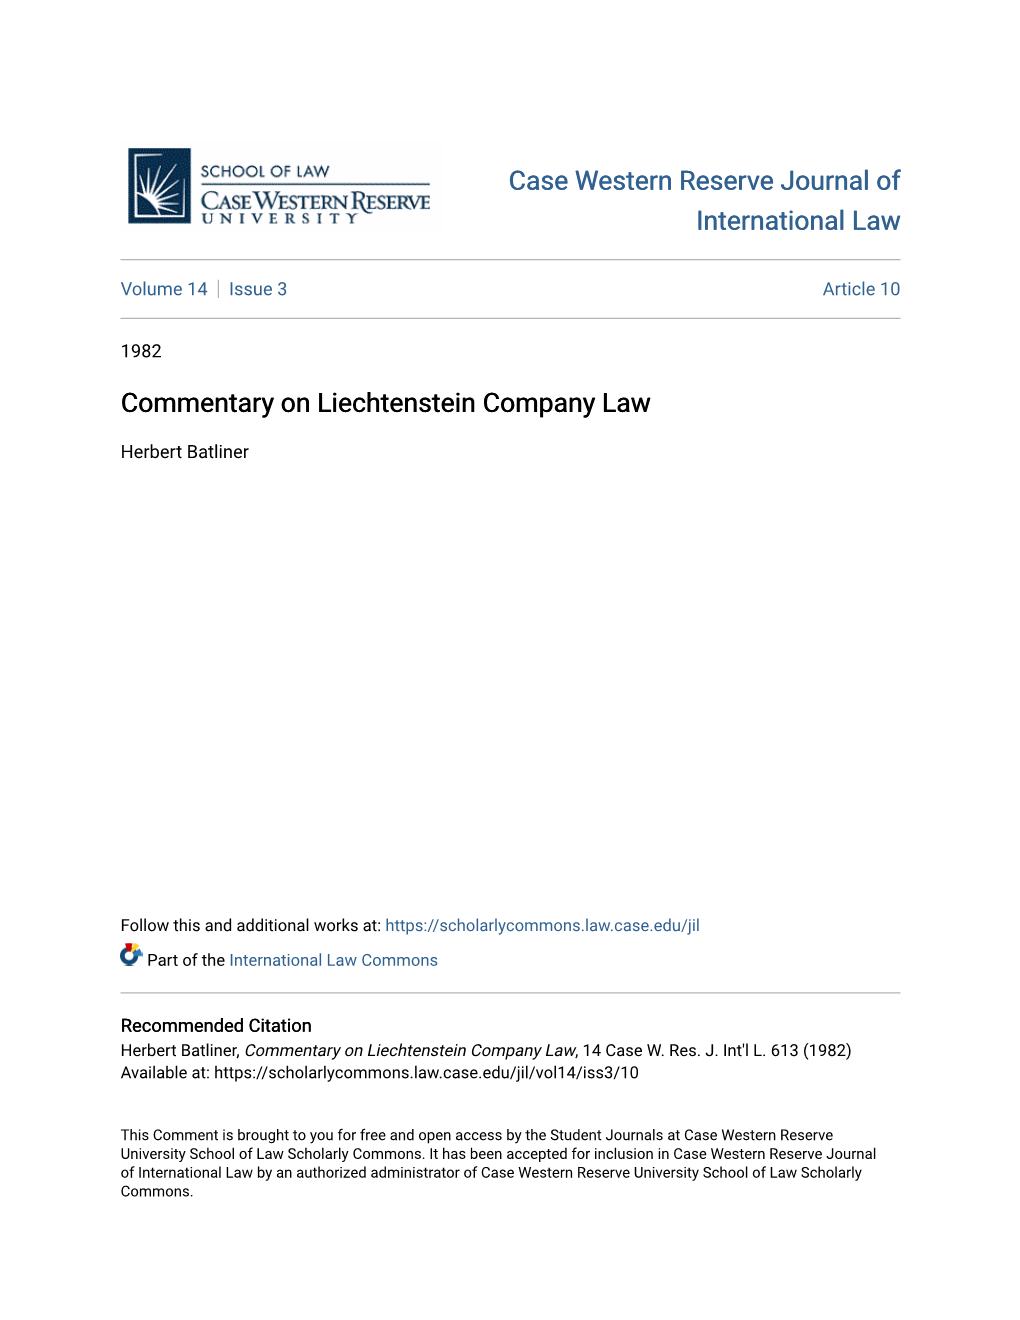 Commentary on Liechtenstein Company Law